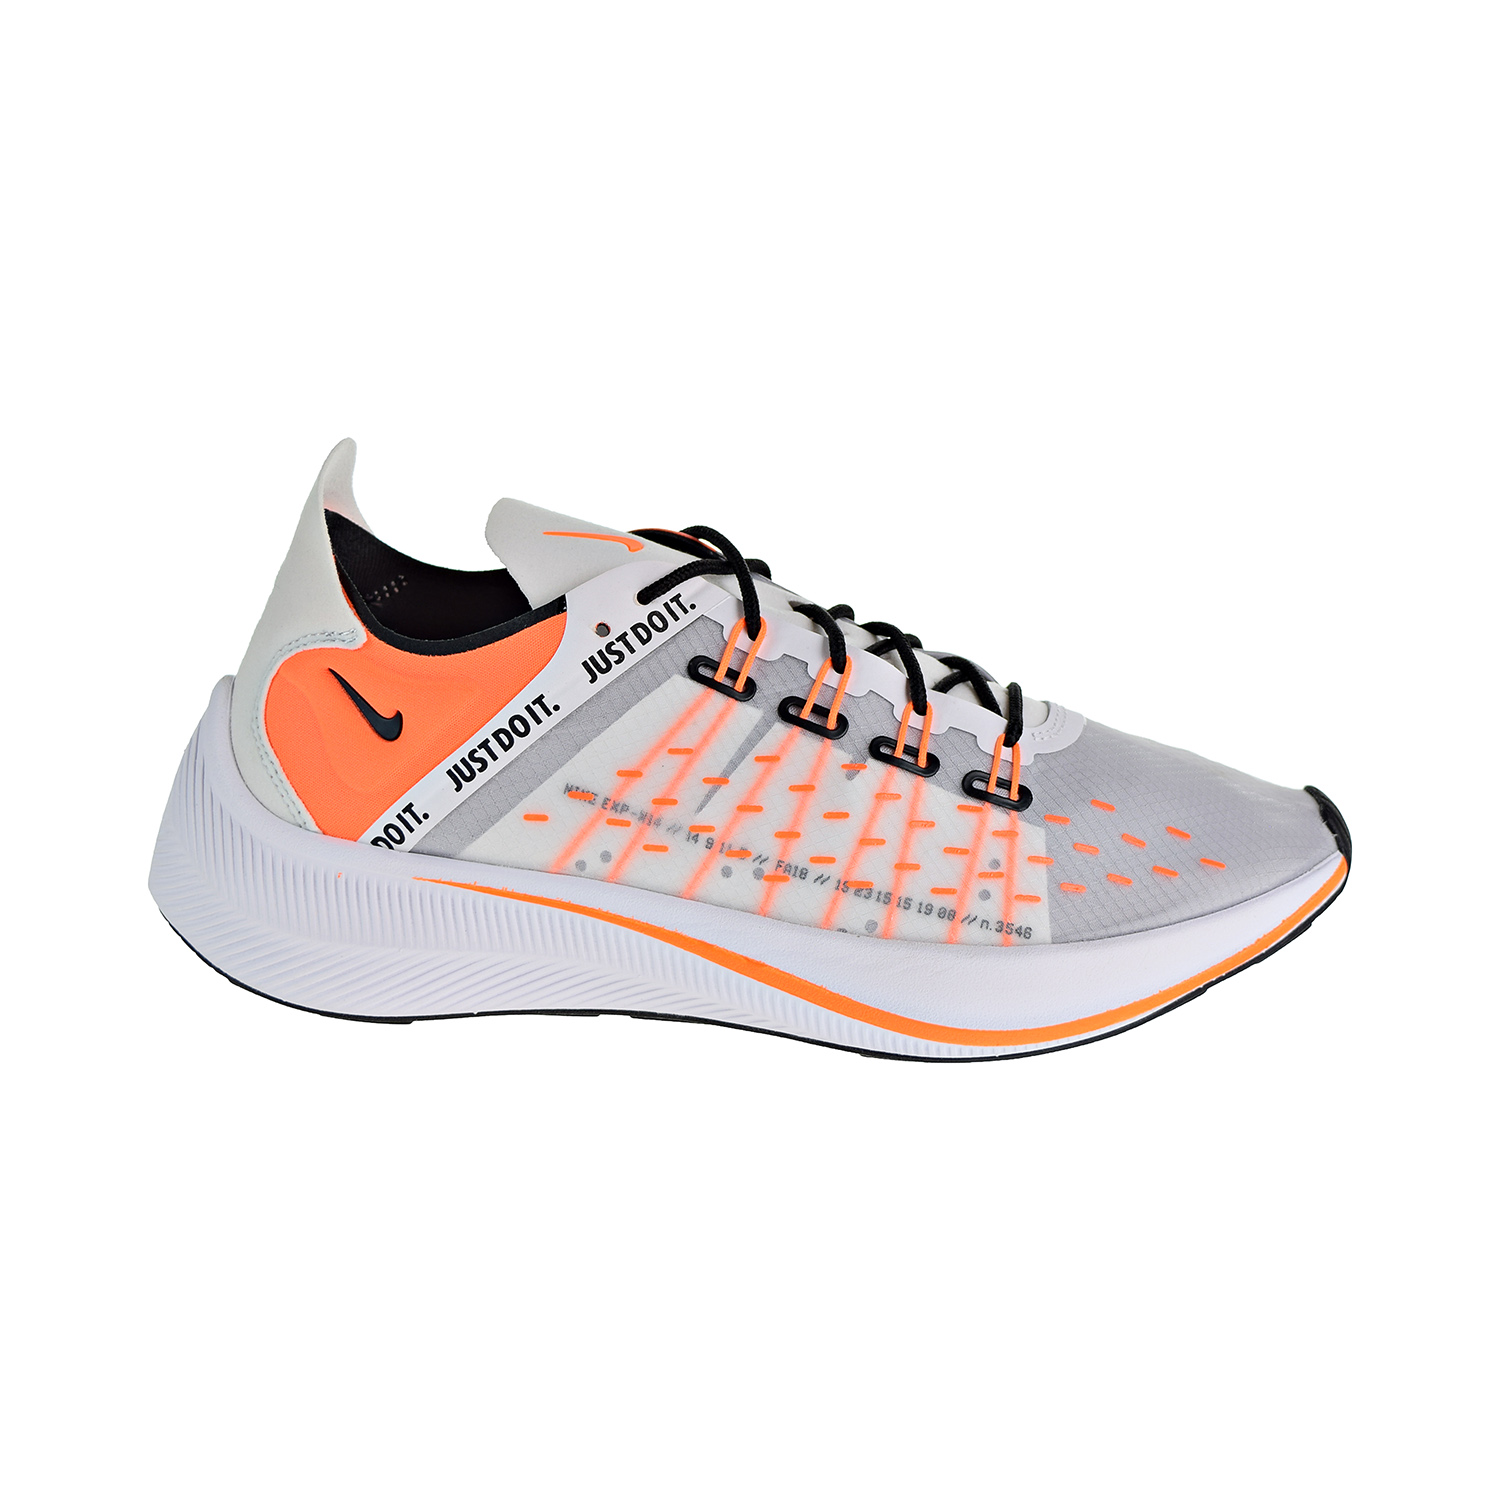 Nike EXP-X14 SE "Just Do It" Men's Shoes White/Total Orange/Black Wolf ao3095-100 - image 1 of 6